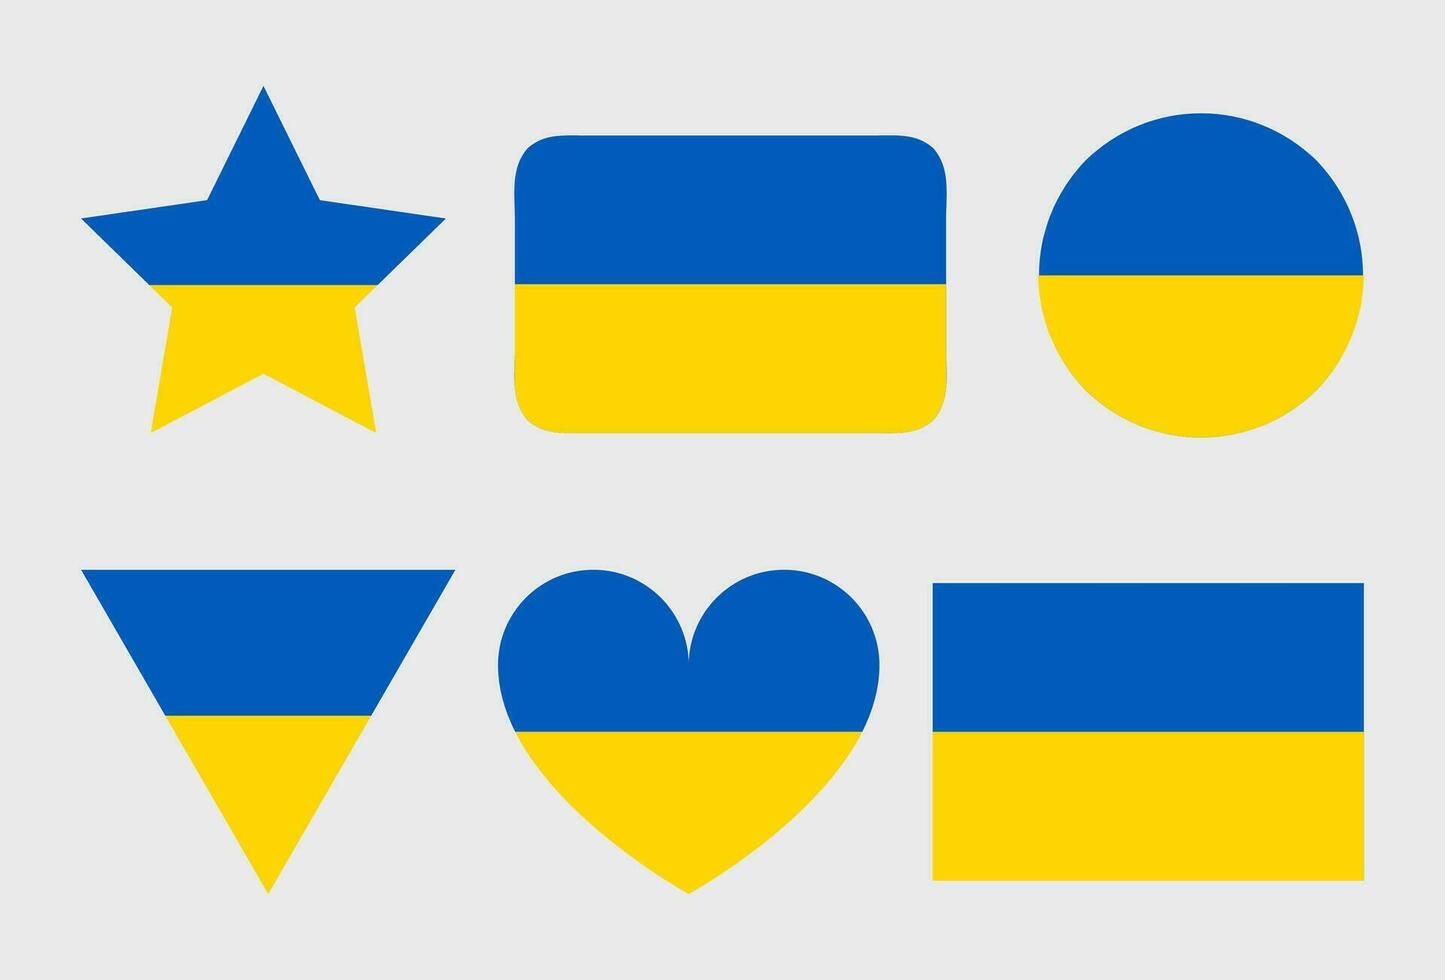 Ukrainian flag. Blue and yellow flag of Ukraine. vector